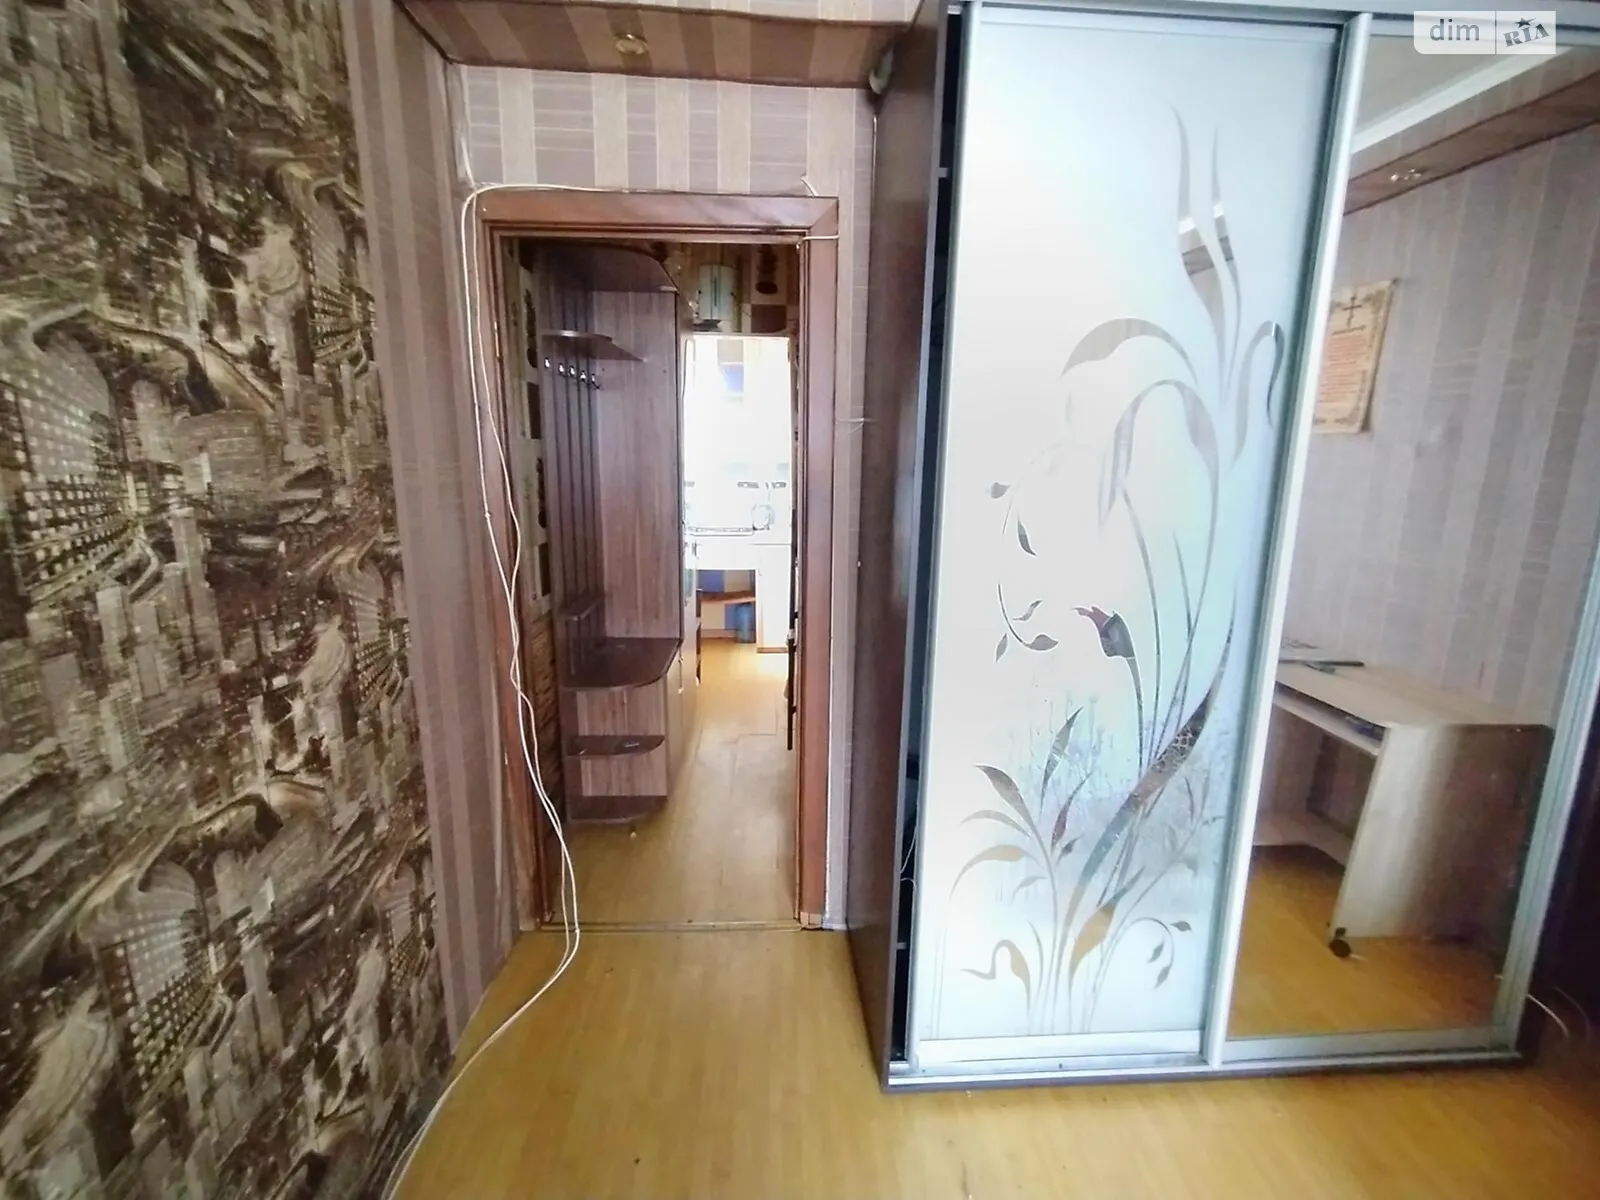 Продается комната 26 кв. м в Харькове - фото 4